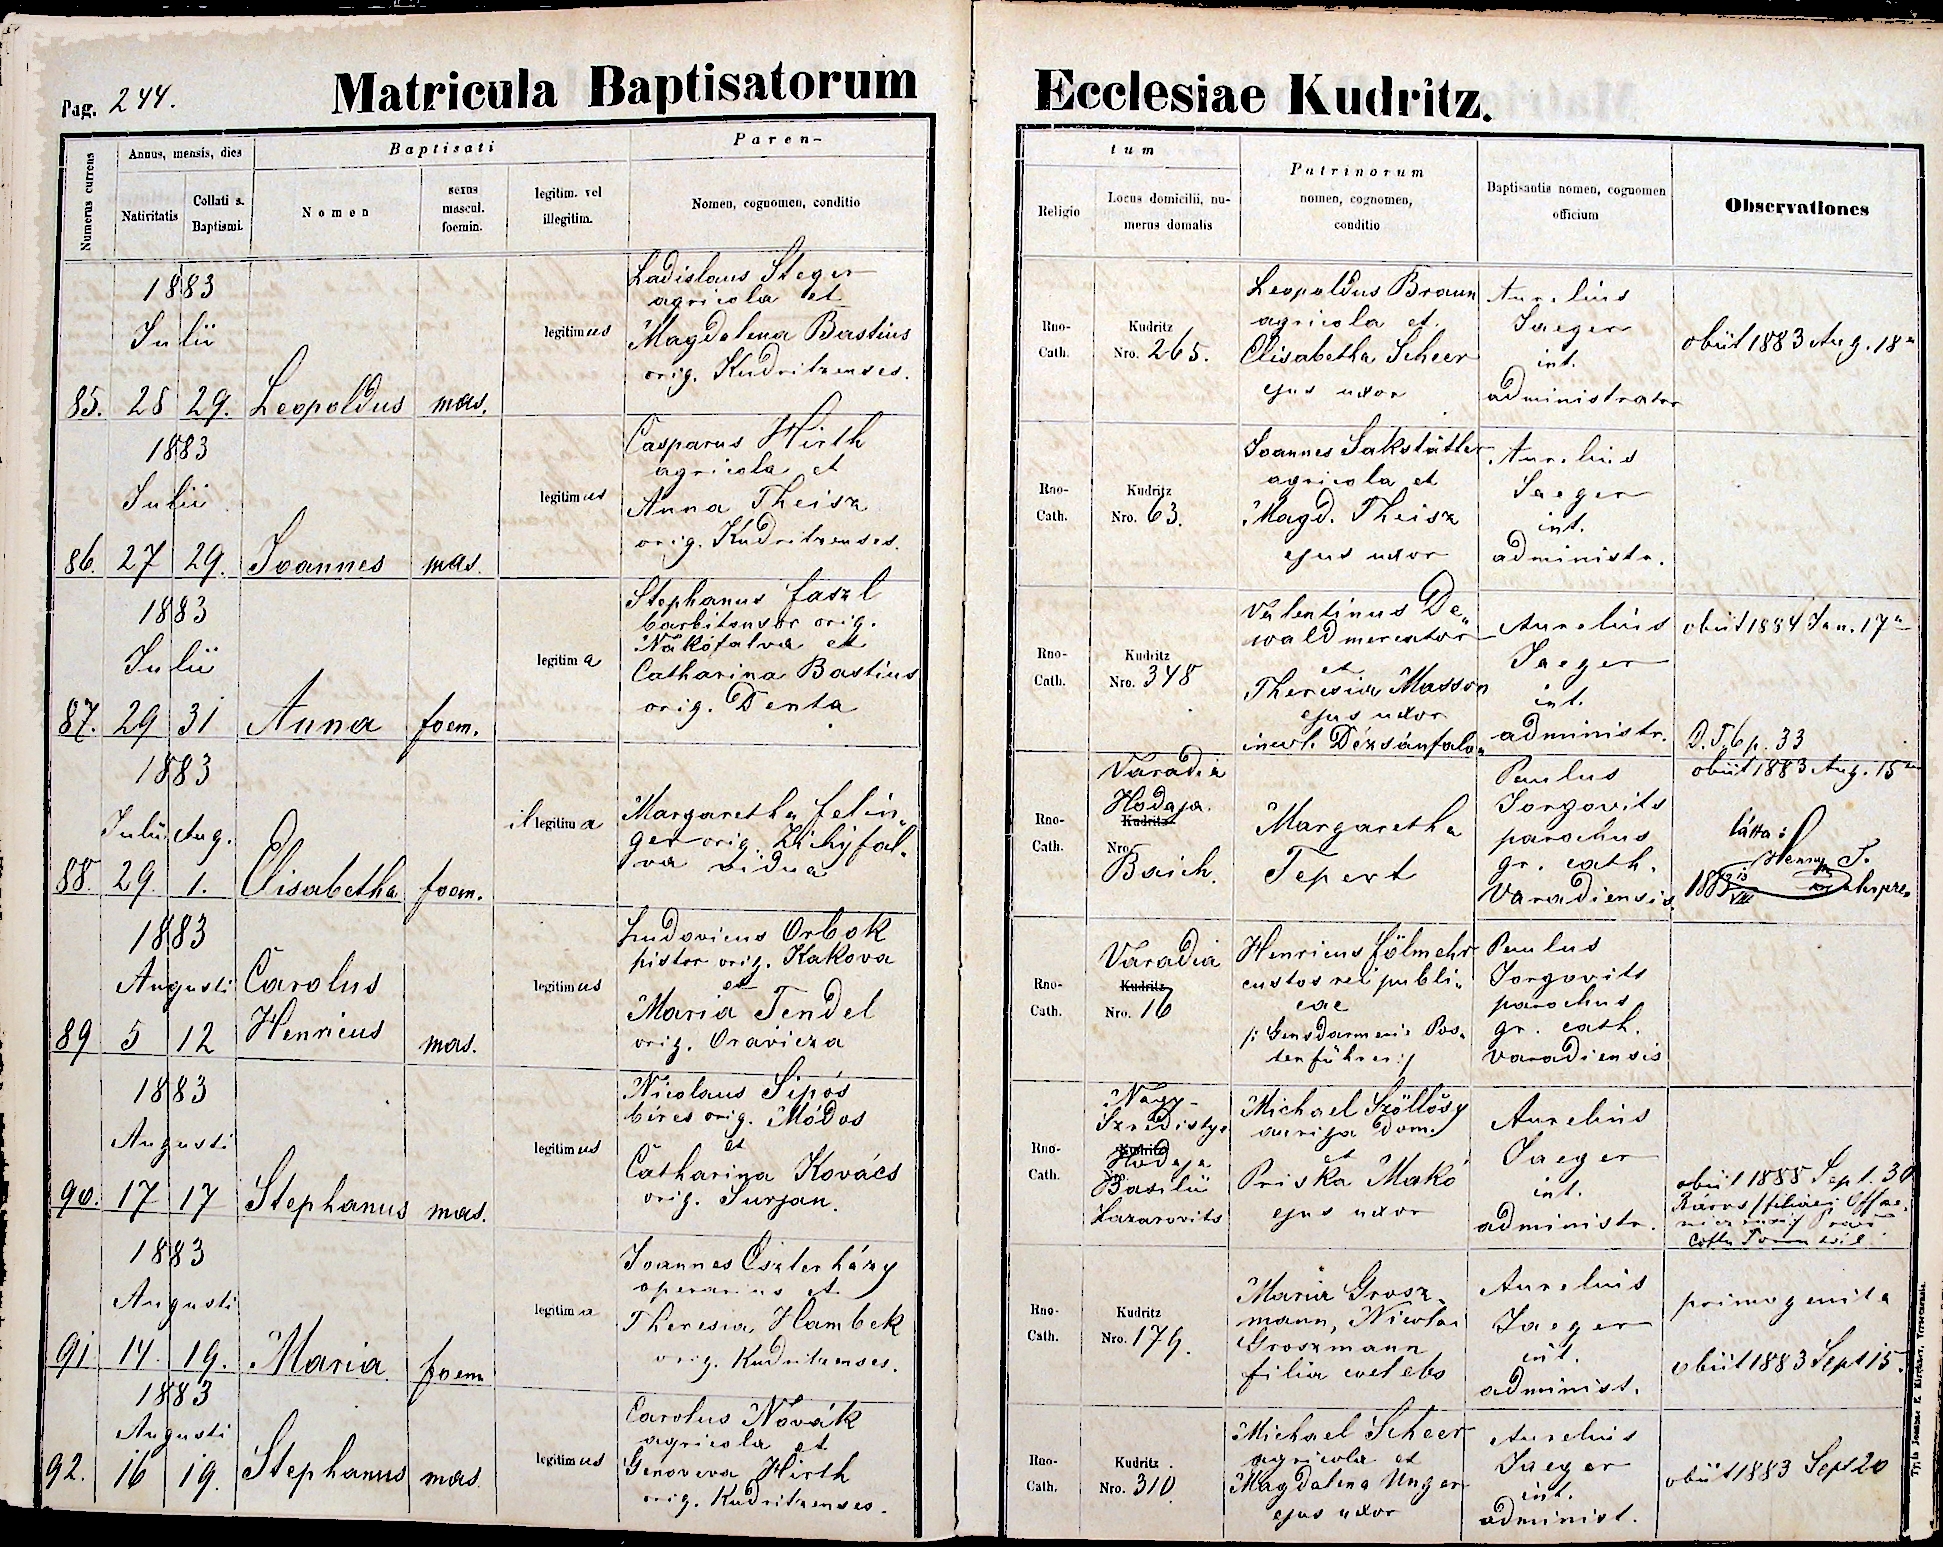 images/church_records/BIRTHS/1880-1883B/1883/244